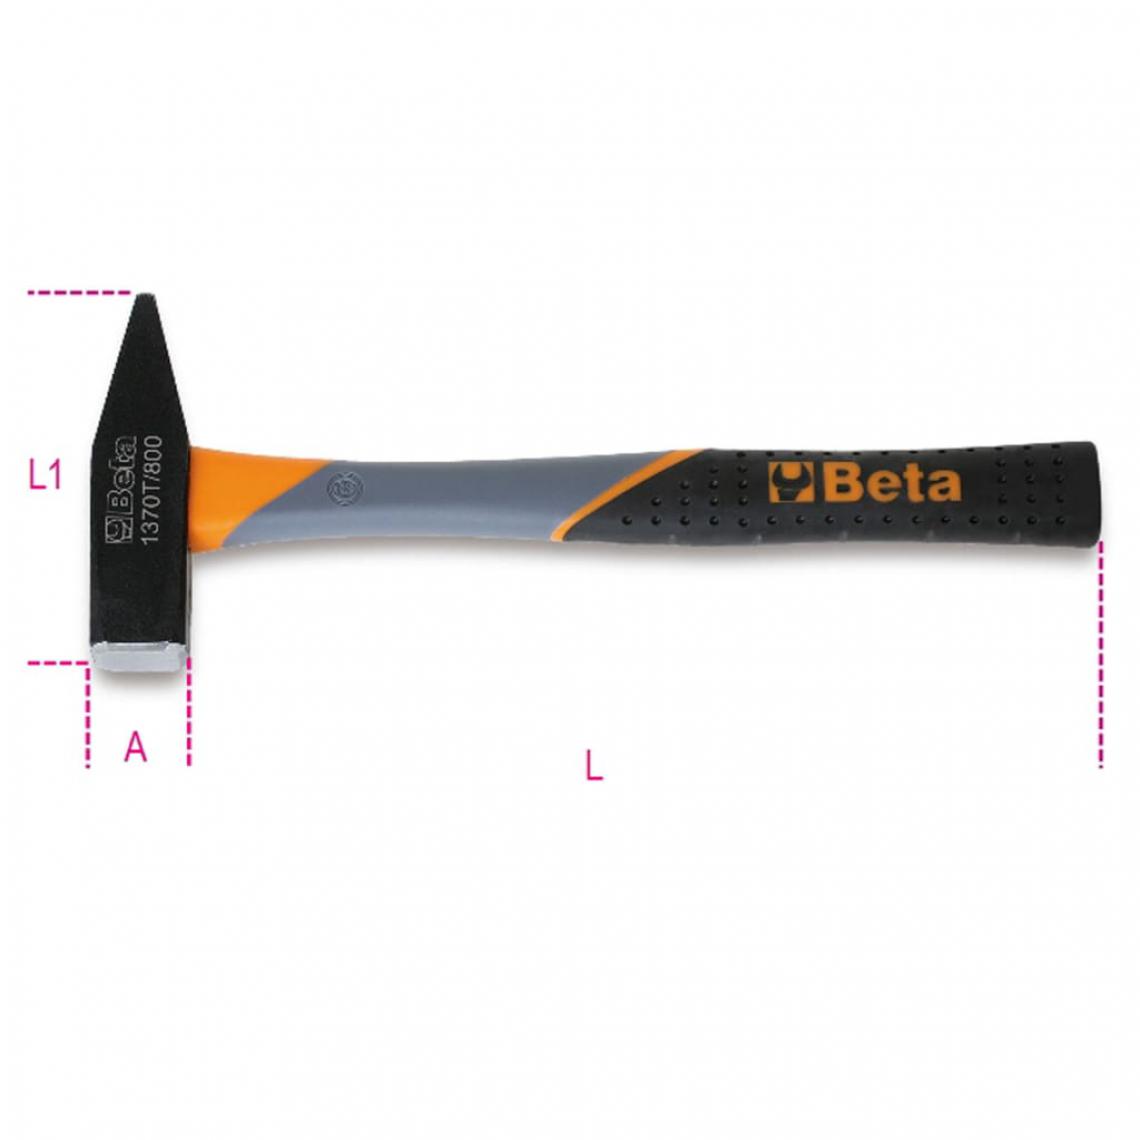 Beta Tools - Beta Tools Marteau de mécanicien 1370T 1000 Manche en fibre 36 cm - Perforateurs, burineurs, marteaux piqueurs